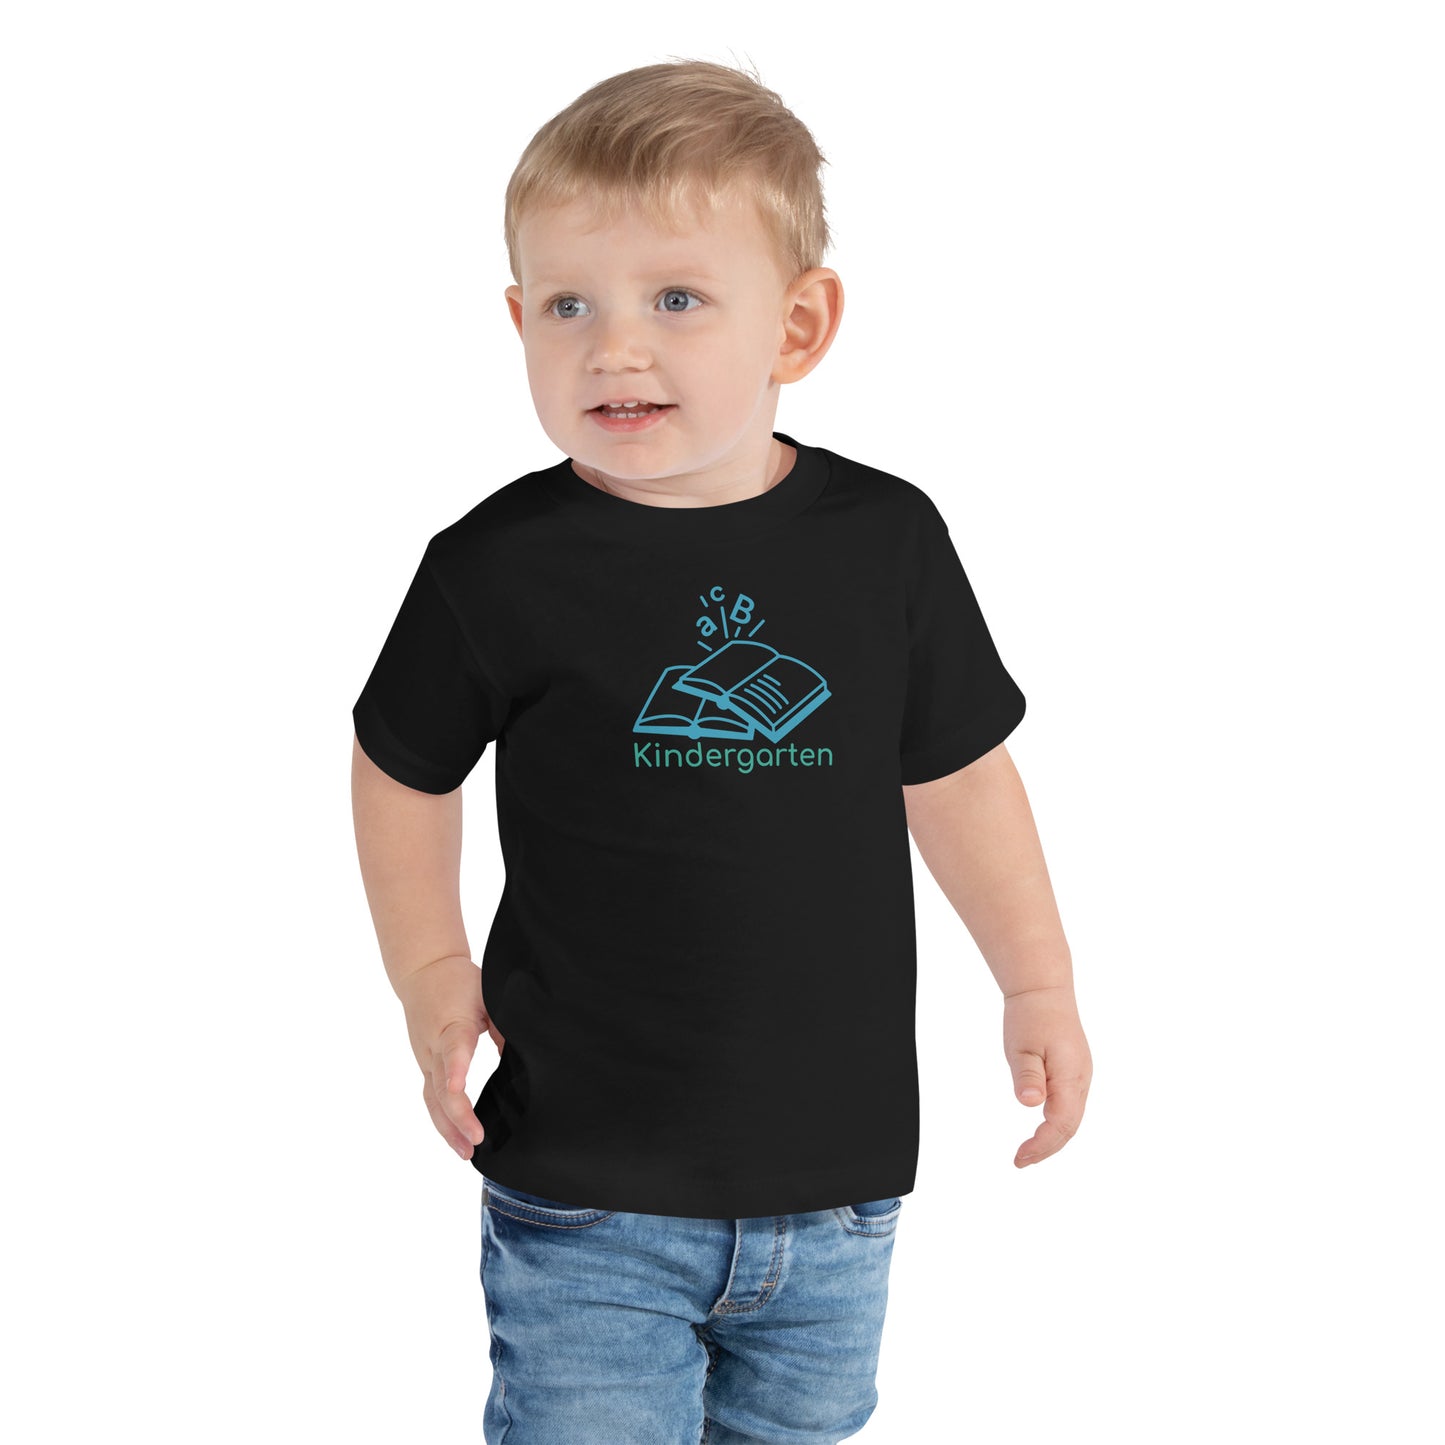 Kindergarten Toddler Boys Short Sleeve T-Shirt